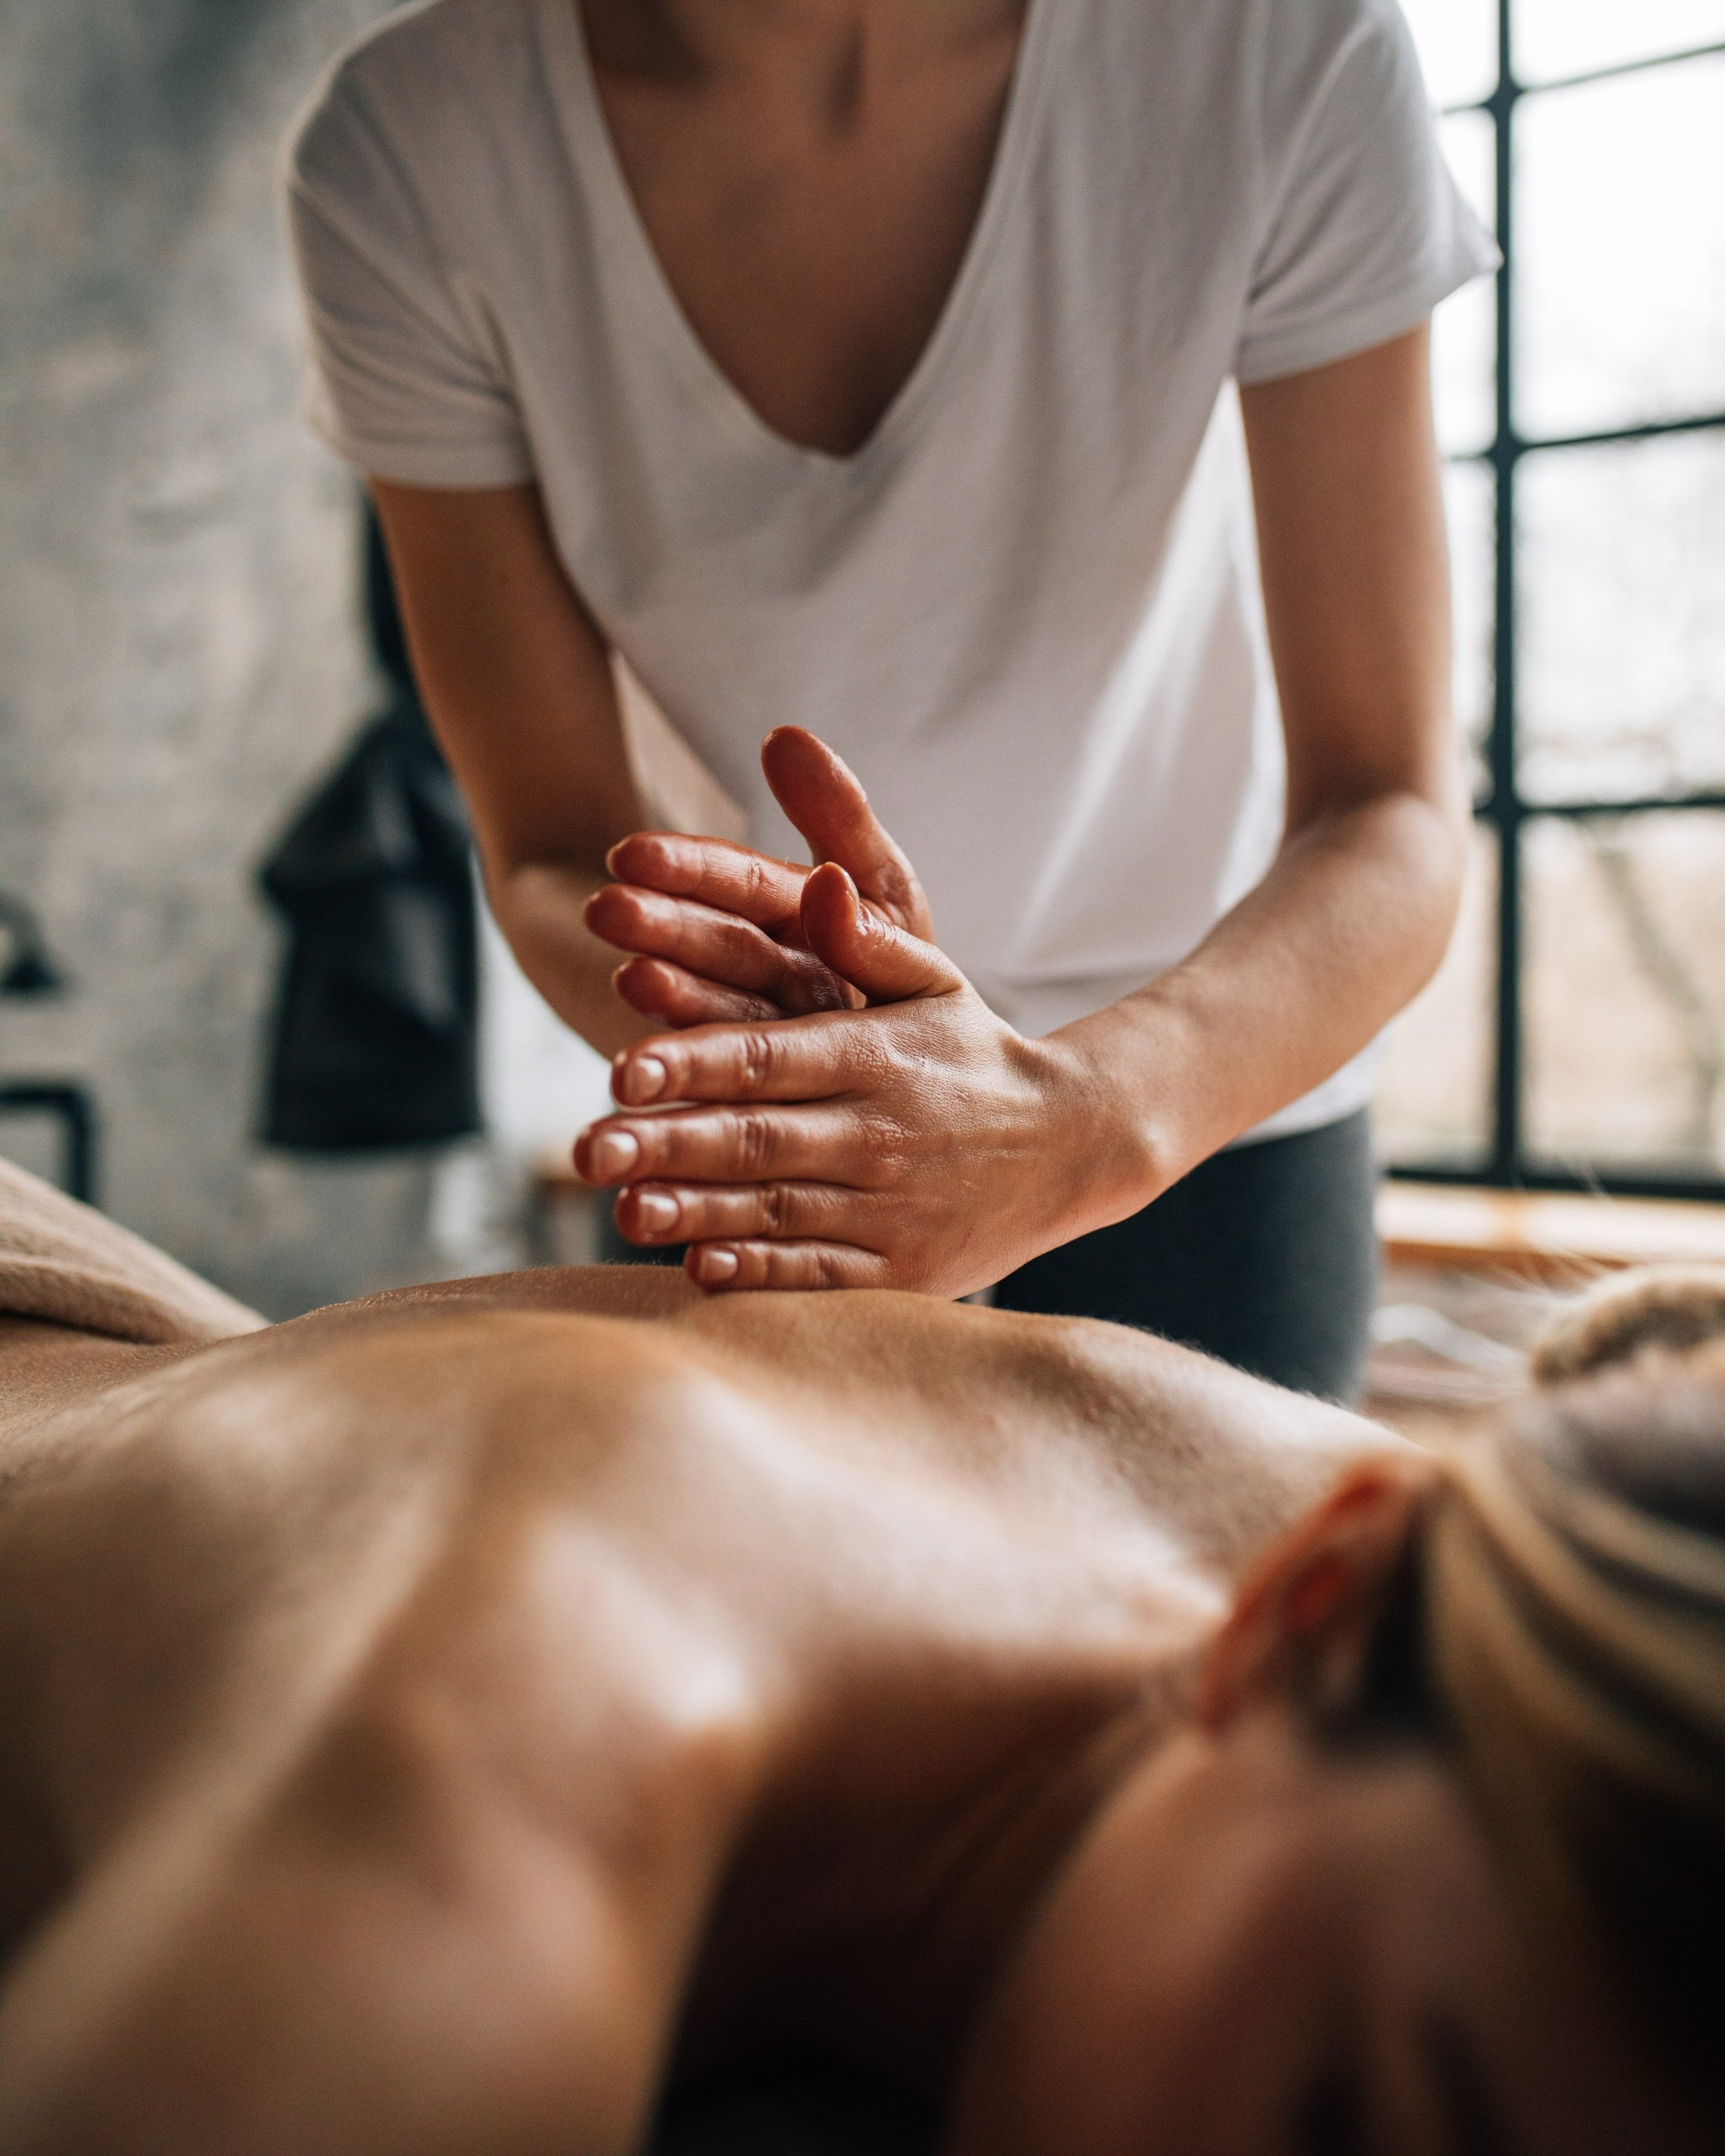 Relaxation Massage Services - Swedish, Hot Stone Massage, Prenatal/Pregnancy, Foot Reflexology